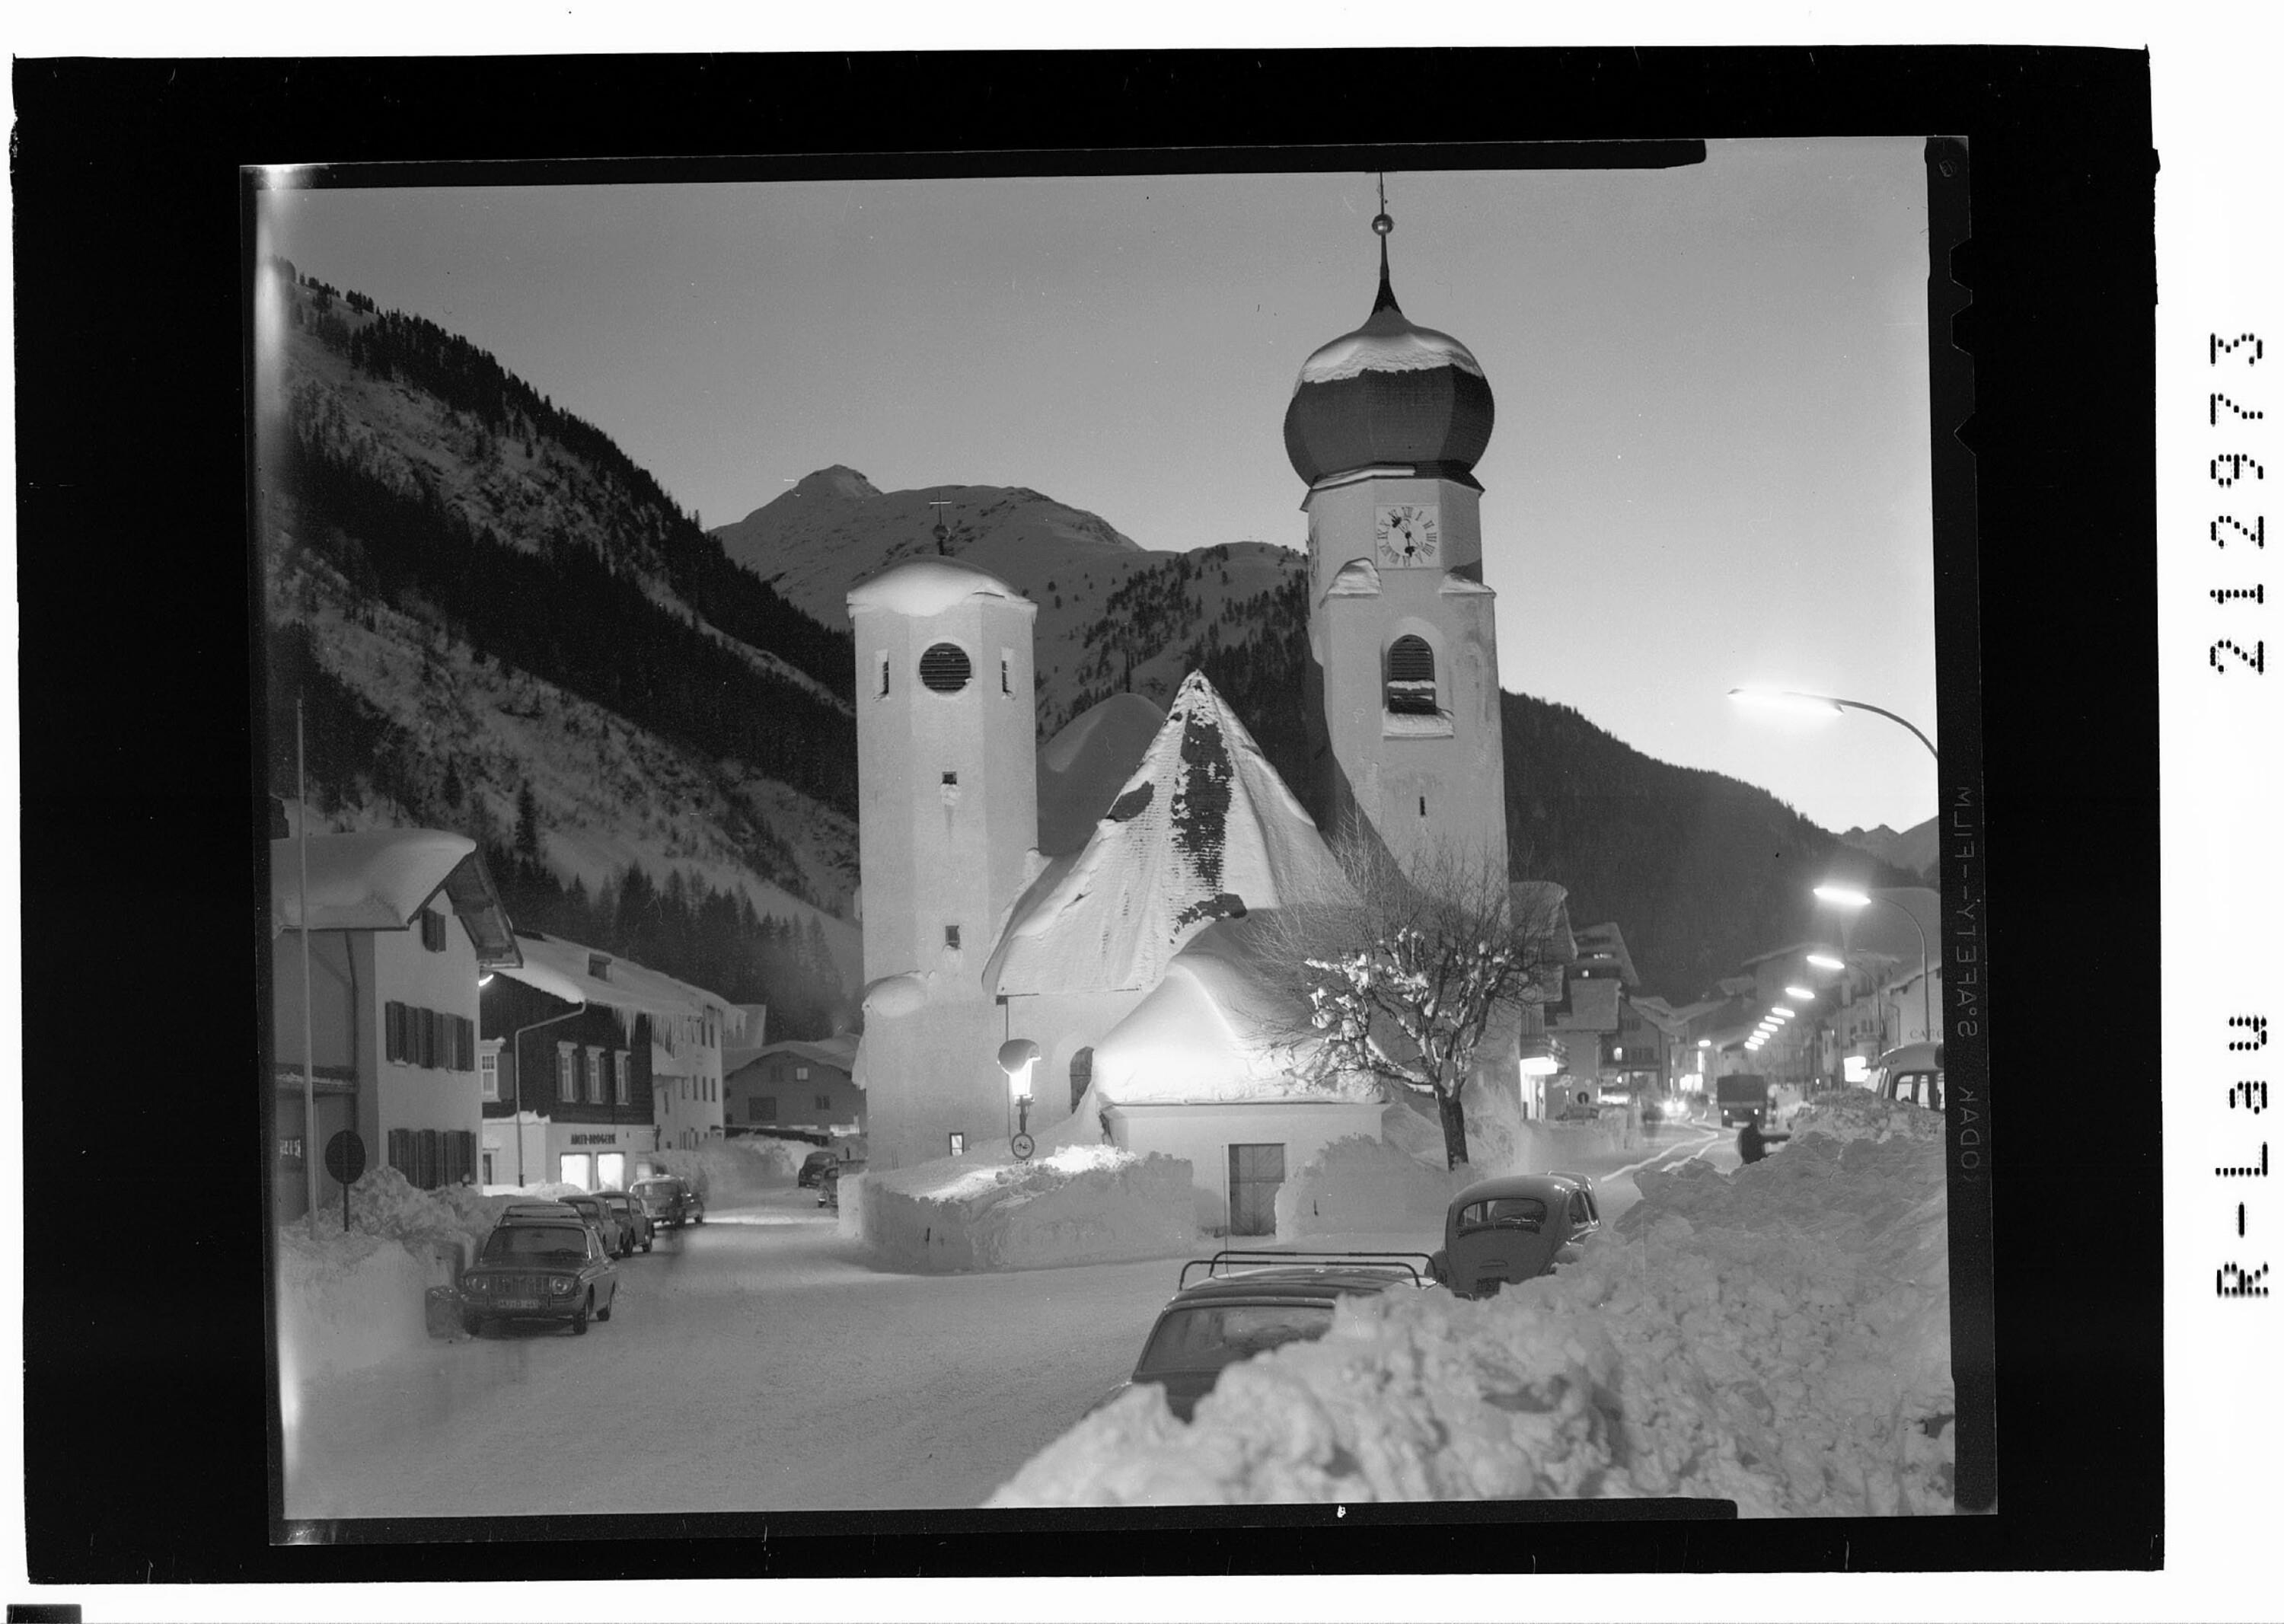 St.Anton 1286 m am Arlberg, Tirol Kirche in der Abenddämmerung></div>


    <hr>
    <div class=